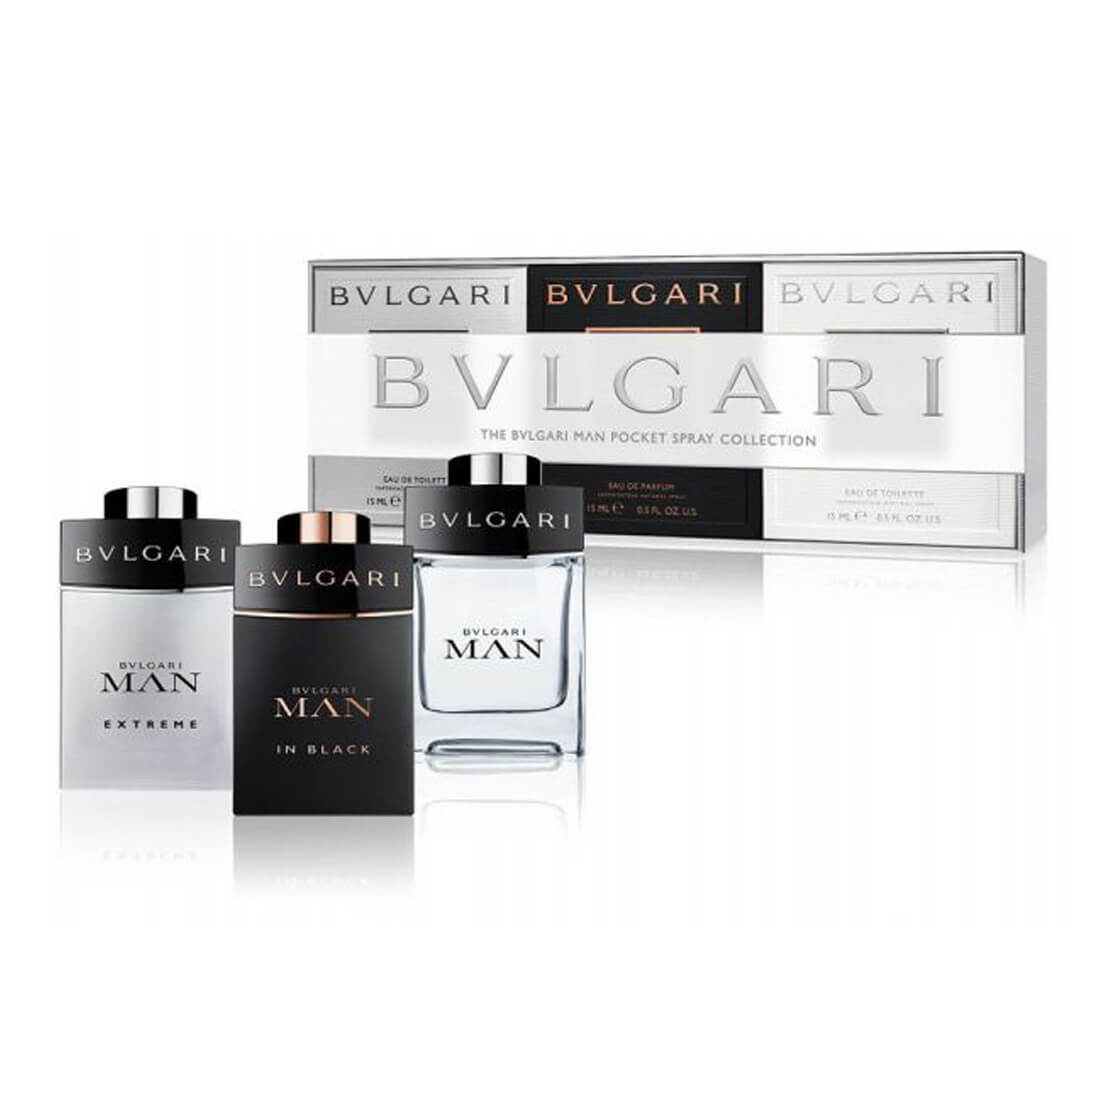 Bvlgari Man Pocket Spray Collection Gift Set Pack of 3